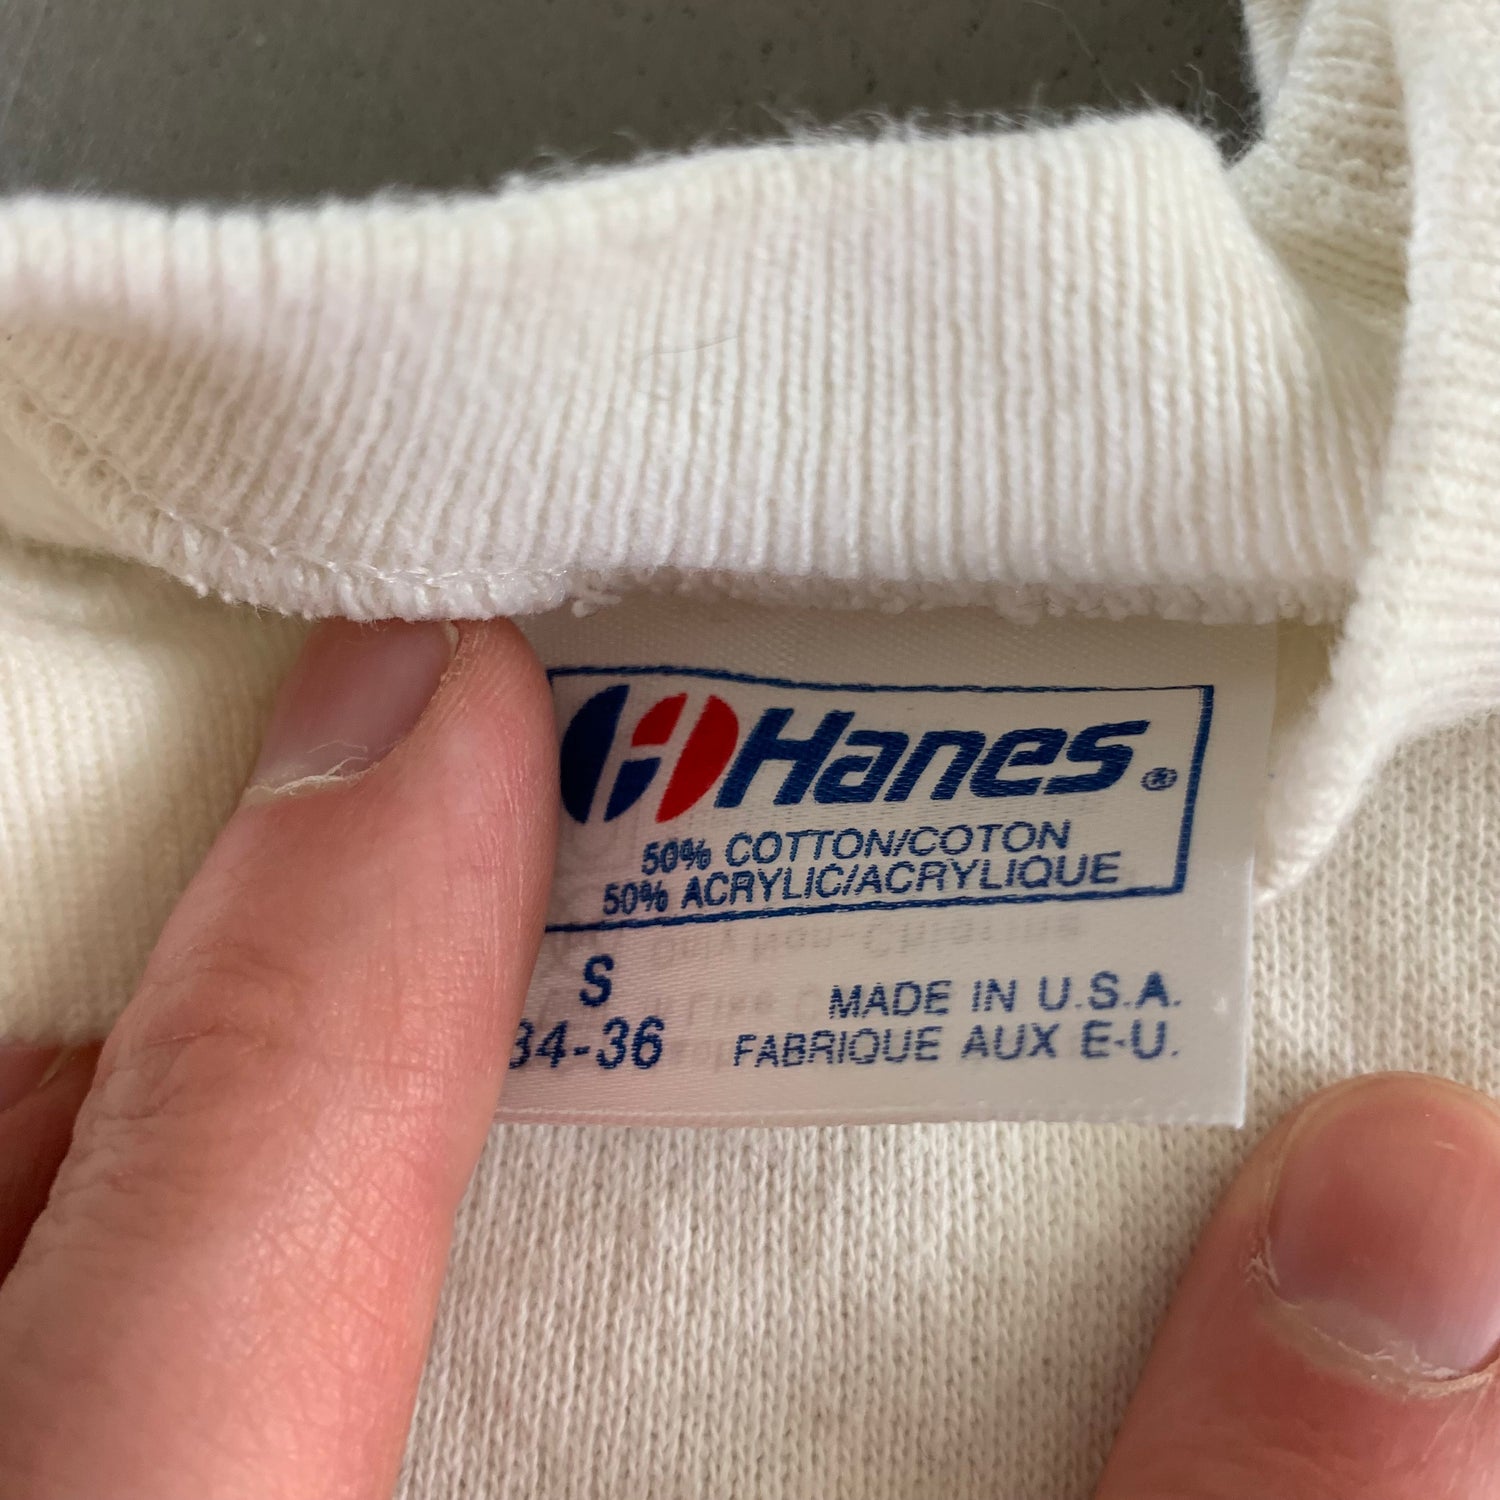 Vintage 1990s Staff Sweatshirt size Small